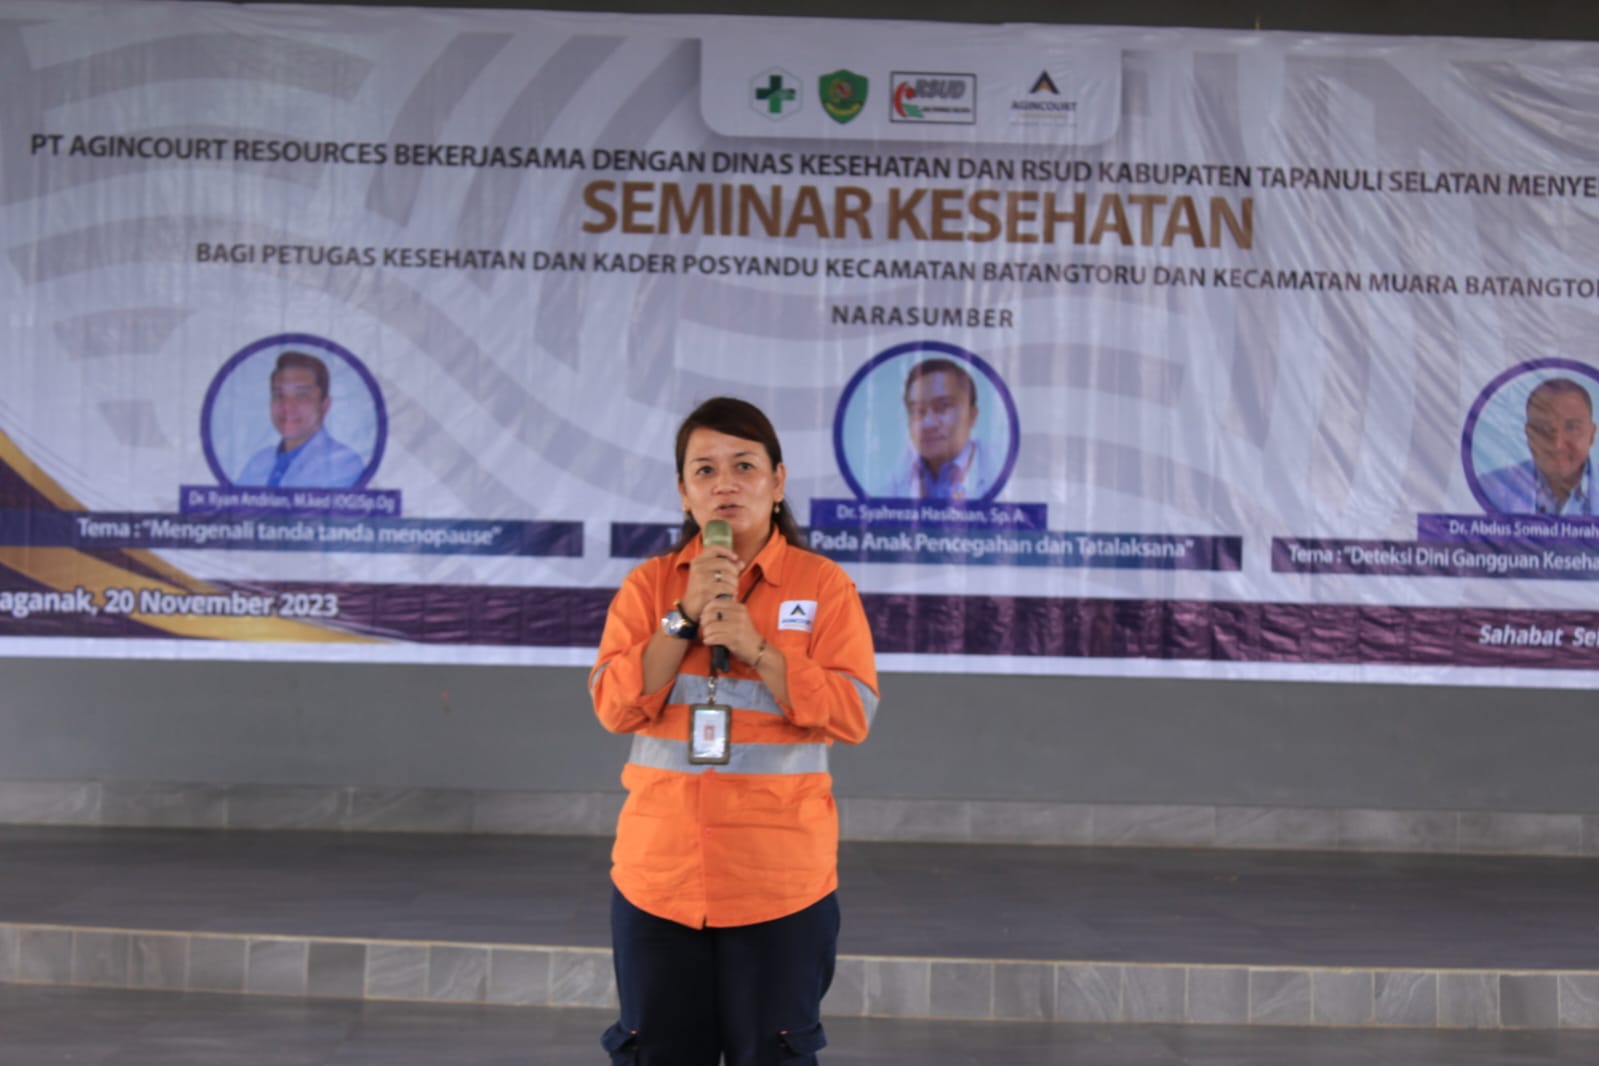 Seminar for Health Cadres in Batangtoru and Muara Batangtoru to Enhance Competence